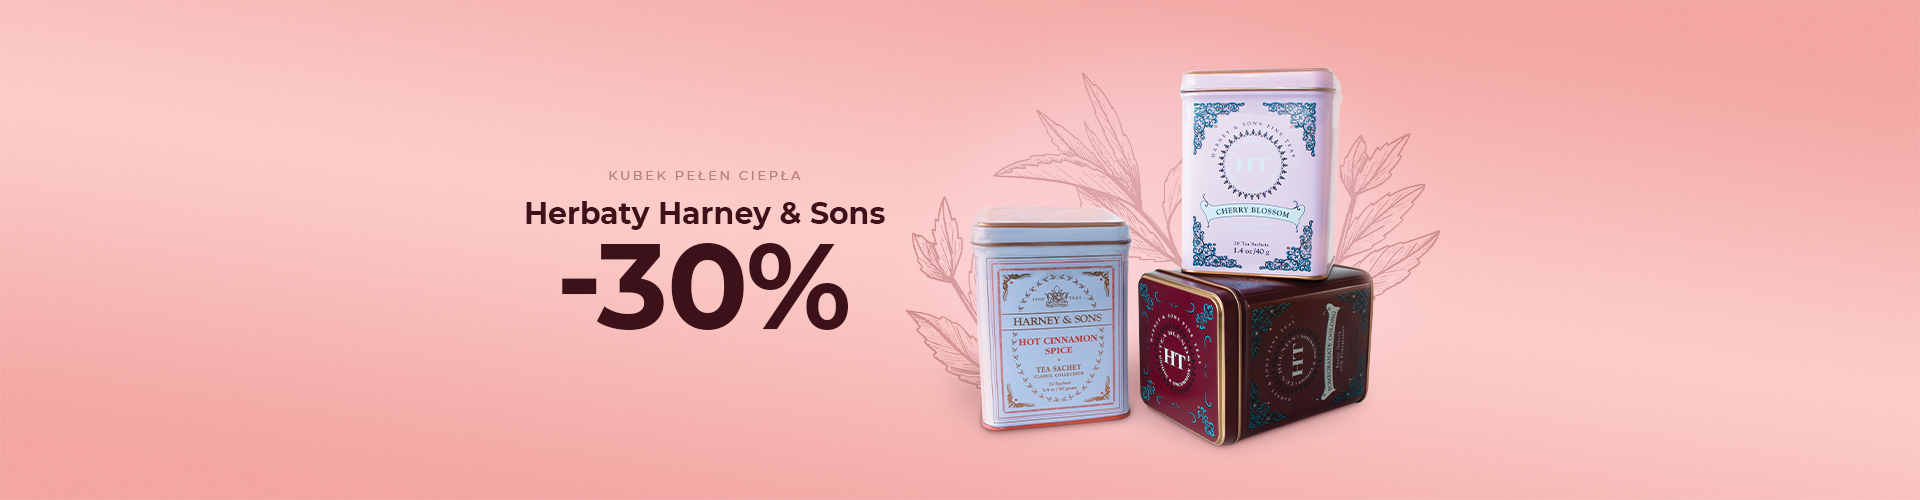 Herbaty Harney & Sons -30%